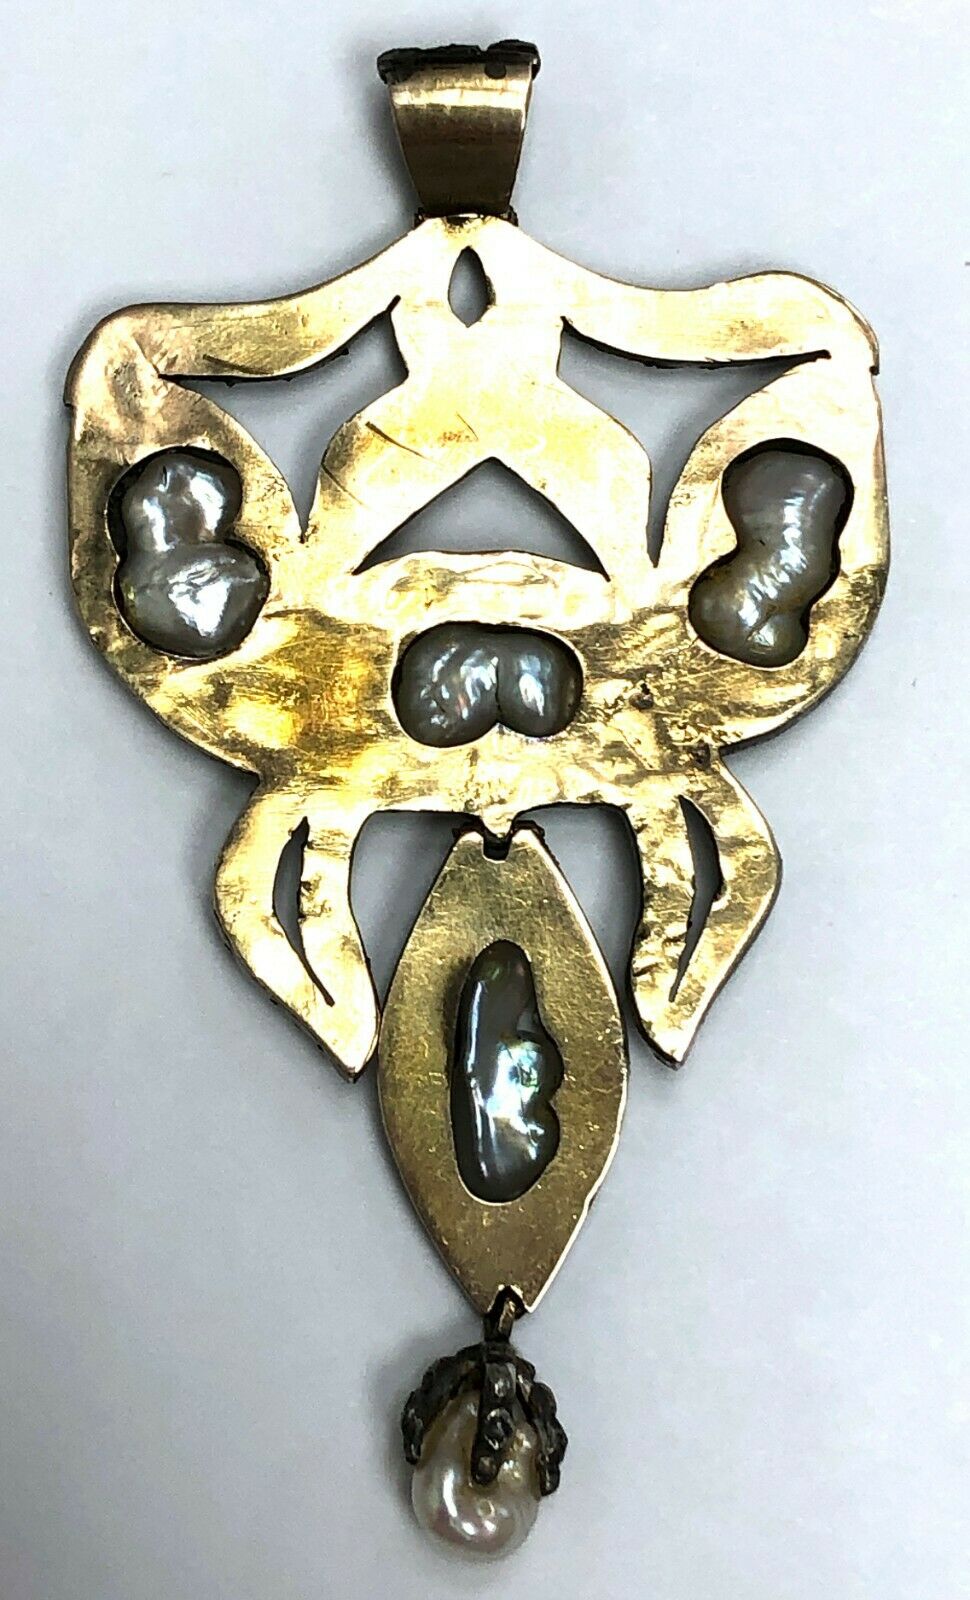 Georgian Era Repro Natural Pearl & Rose Cut Diamond Silver-Topped Gold Pendant